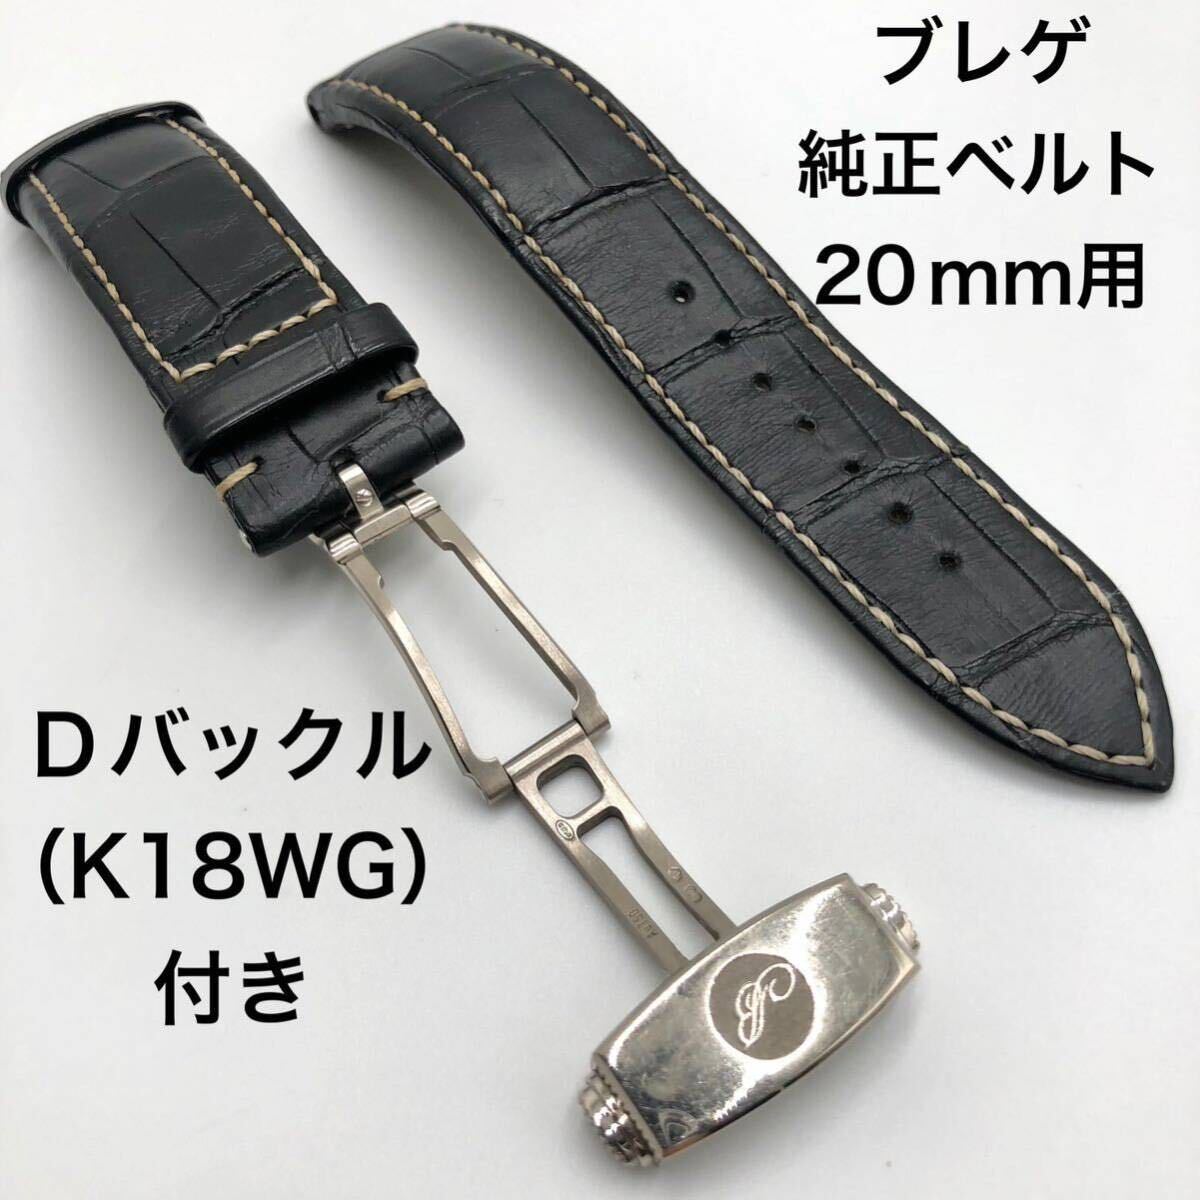 [ beautiful goods ] Breguet K18WG original belt 20mm for navy marine worn te-ji5817 5410 D buckle attaching leather black ko type pushed .